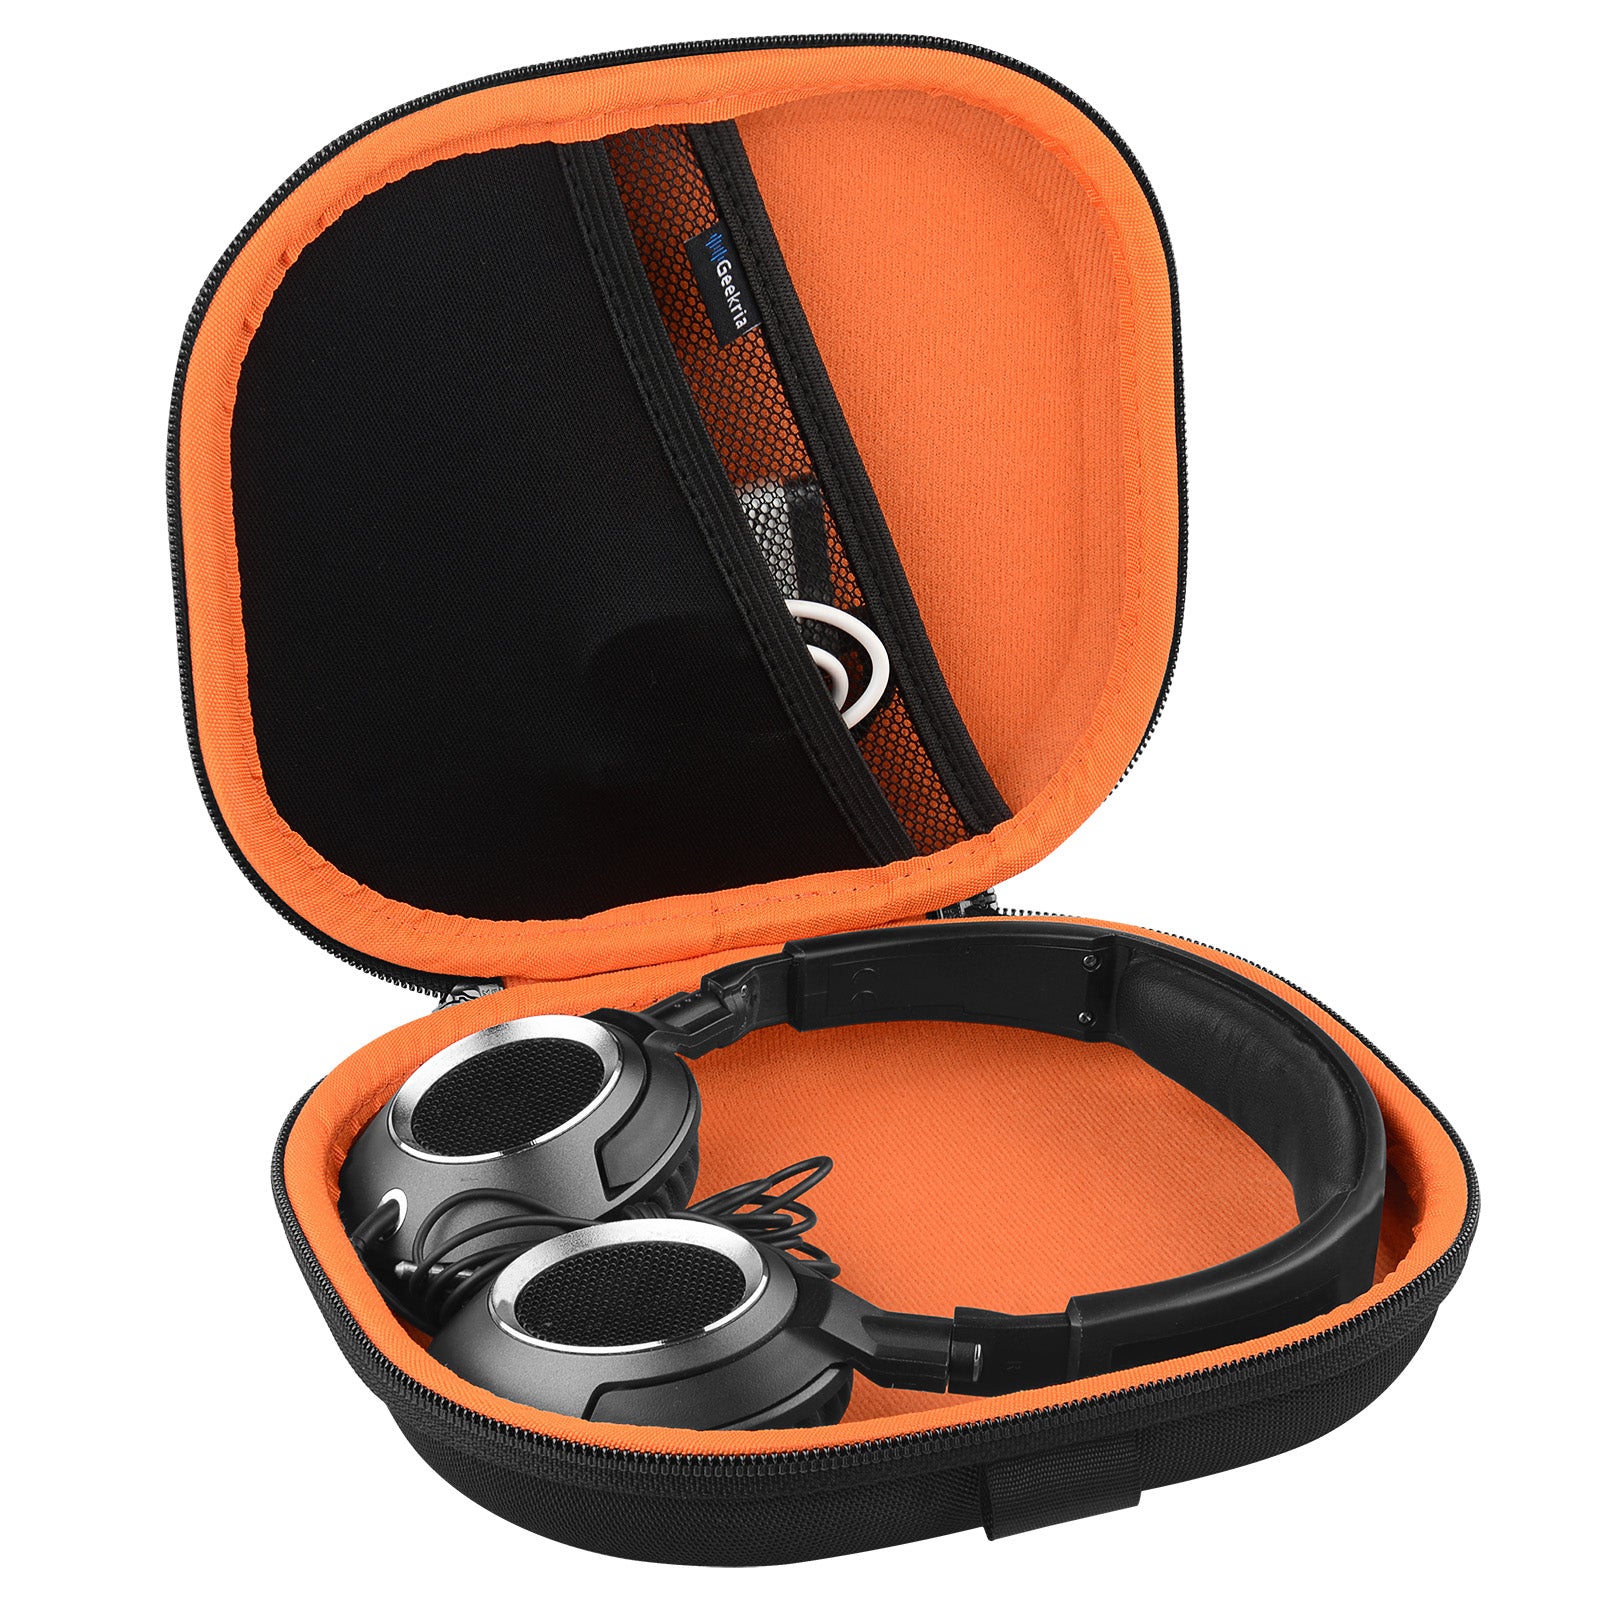 Headphones Case Sennheiser, Travel Bag Headphones